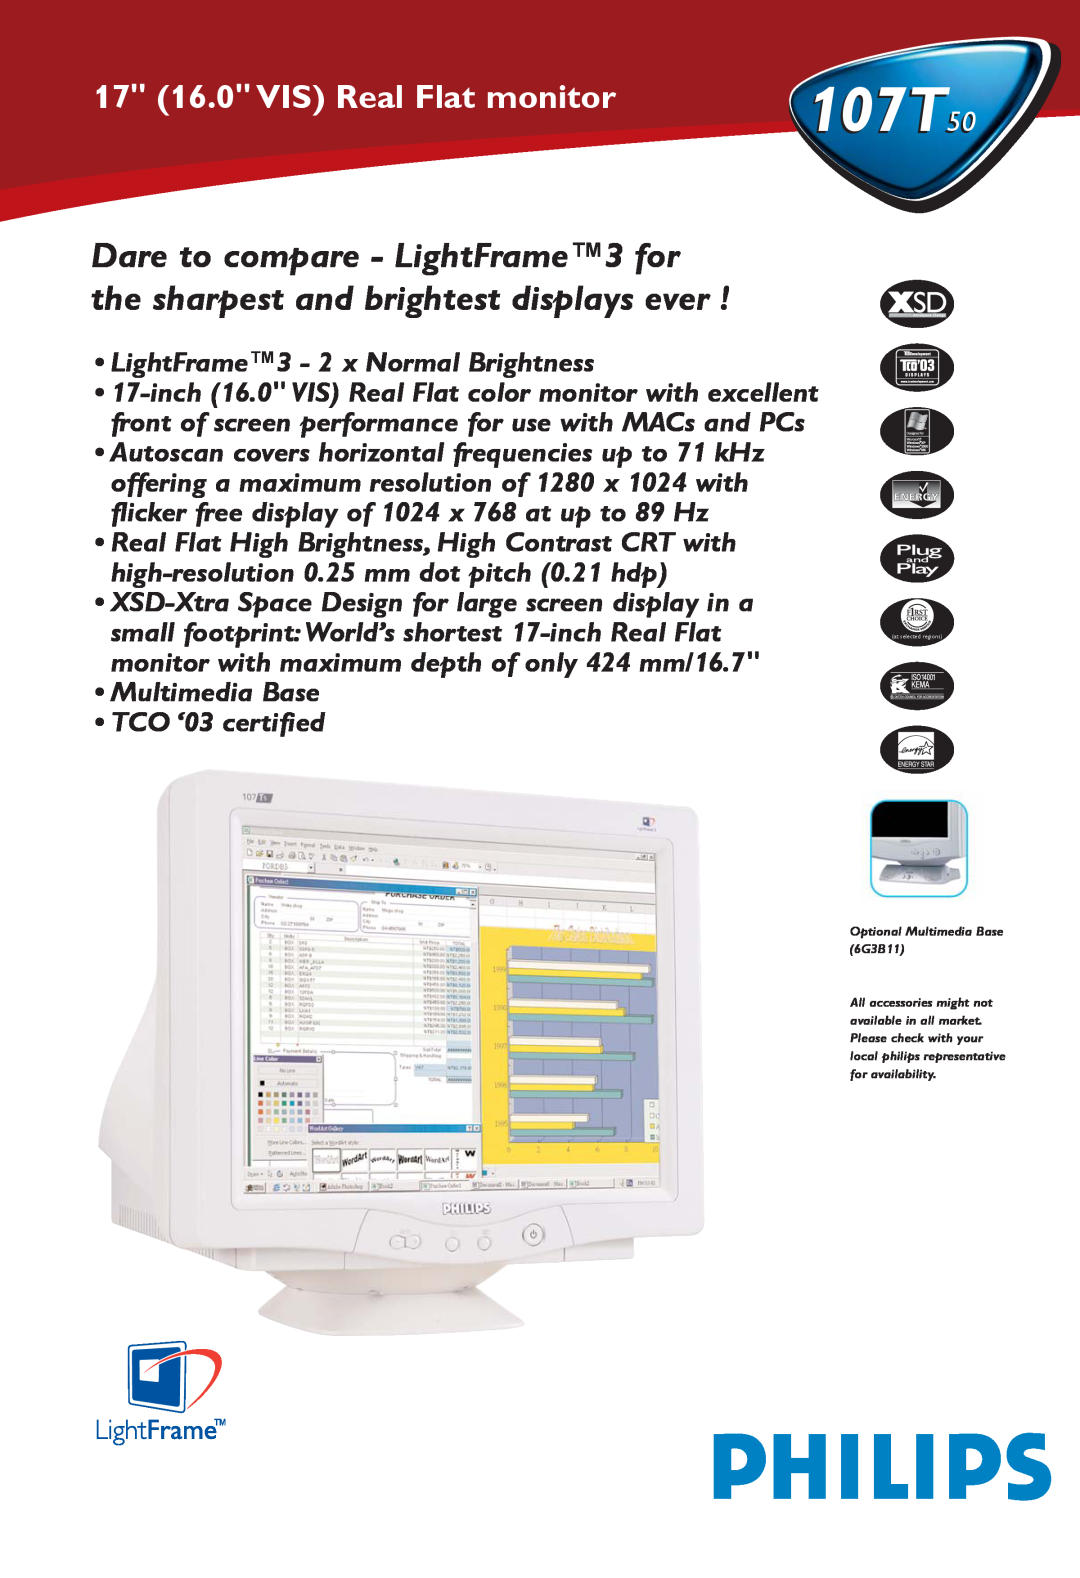 Philips 107T50 manual 17 16.0 VIS Real Flat monitor, LightFrame3 - 2 x Normal Brightness 